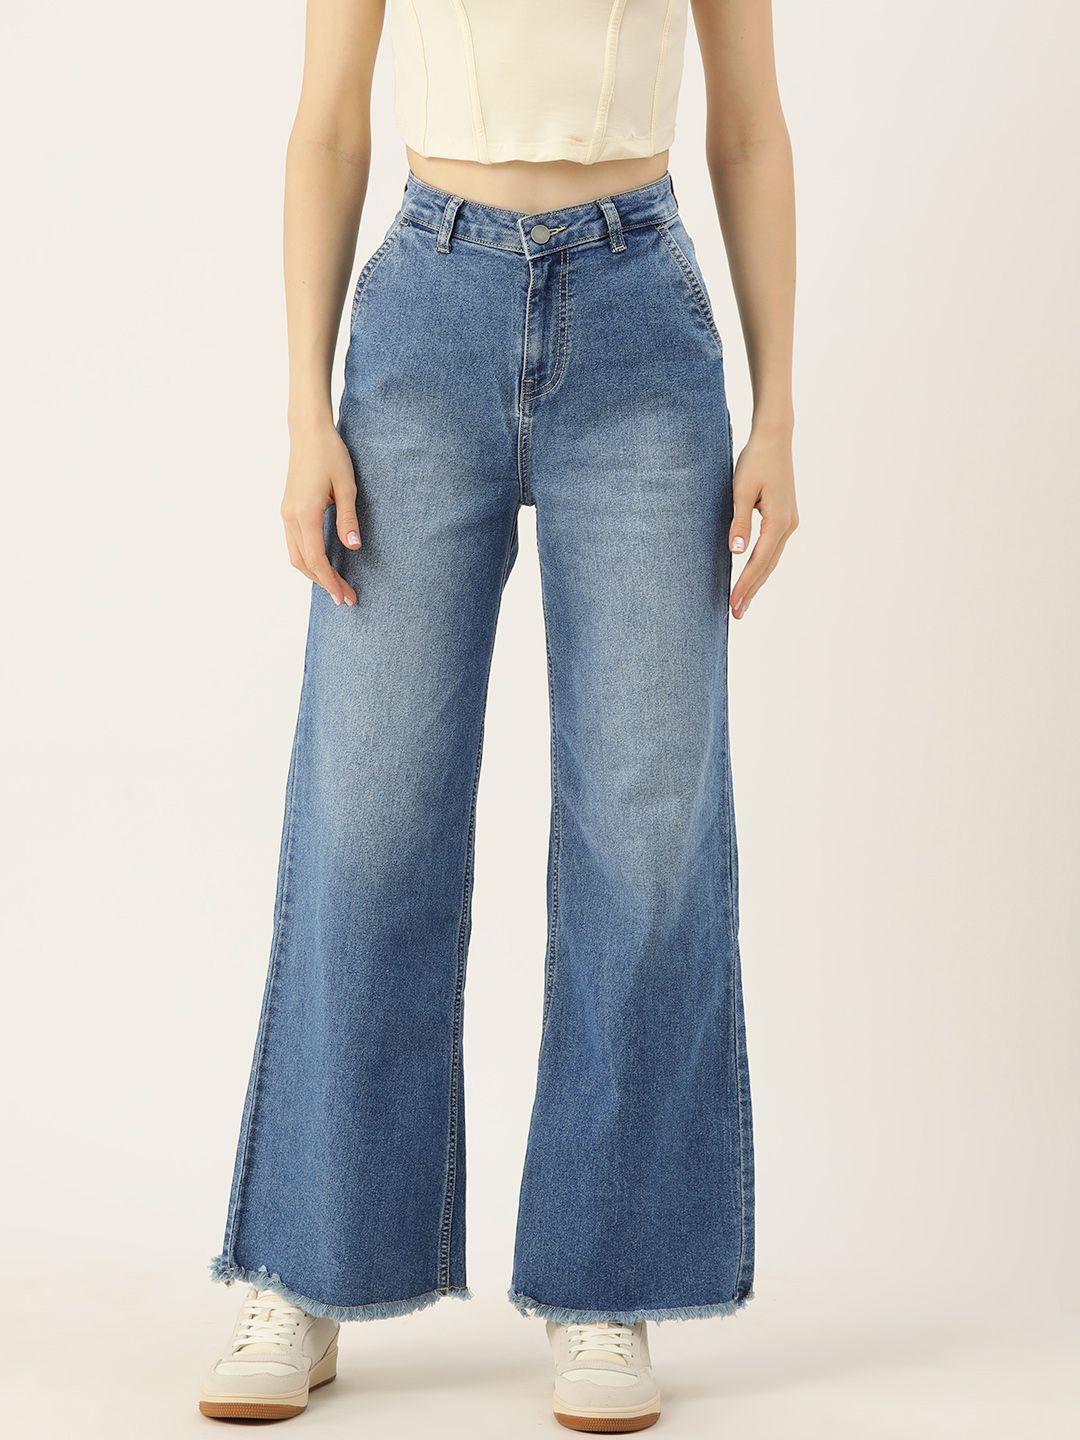 dressberry women wide leg light fade stretchable jeans